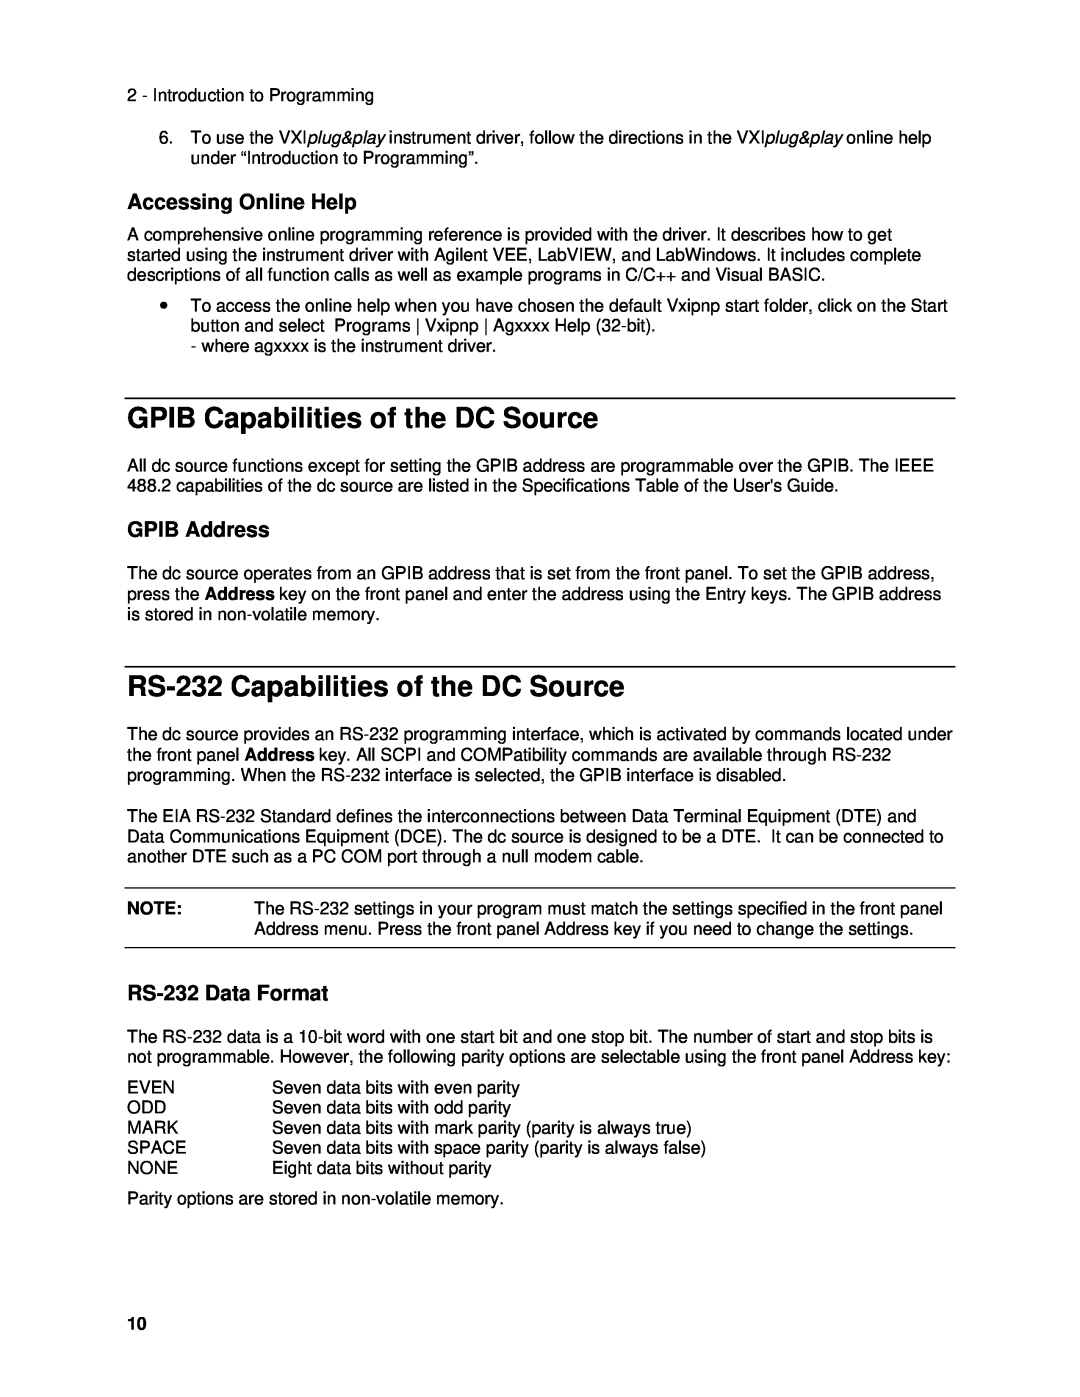 Agilent Technologies 6634B GPIB Capabilities of the DC Source, RS-232Capabilities of the DC Source, Accessing Online Help 